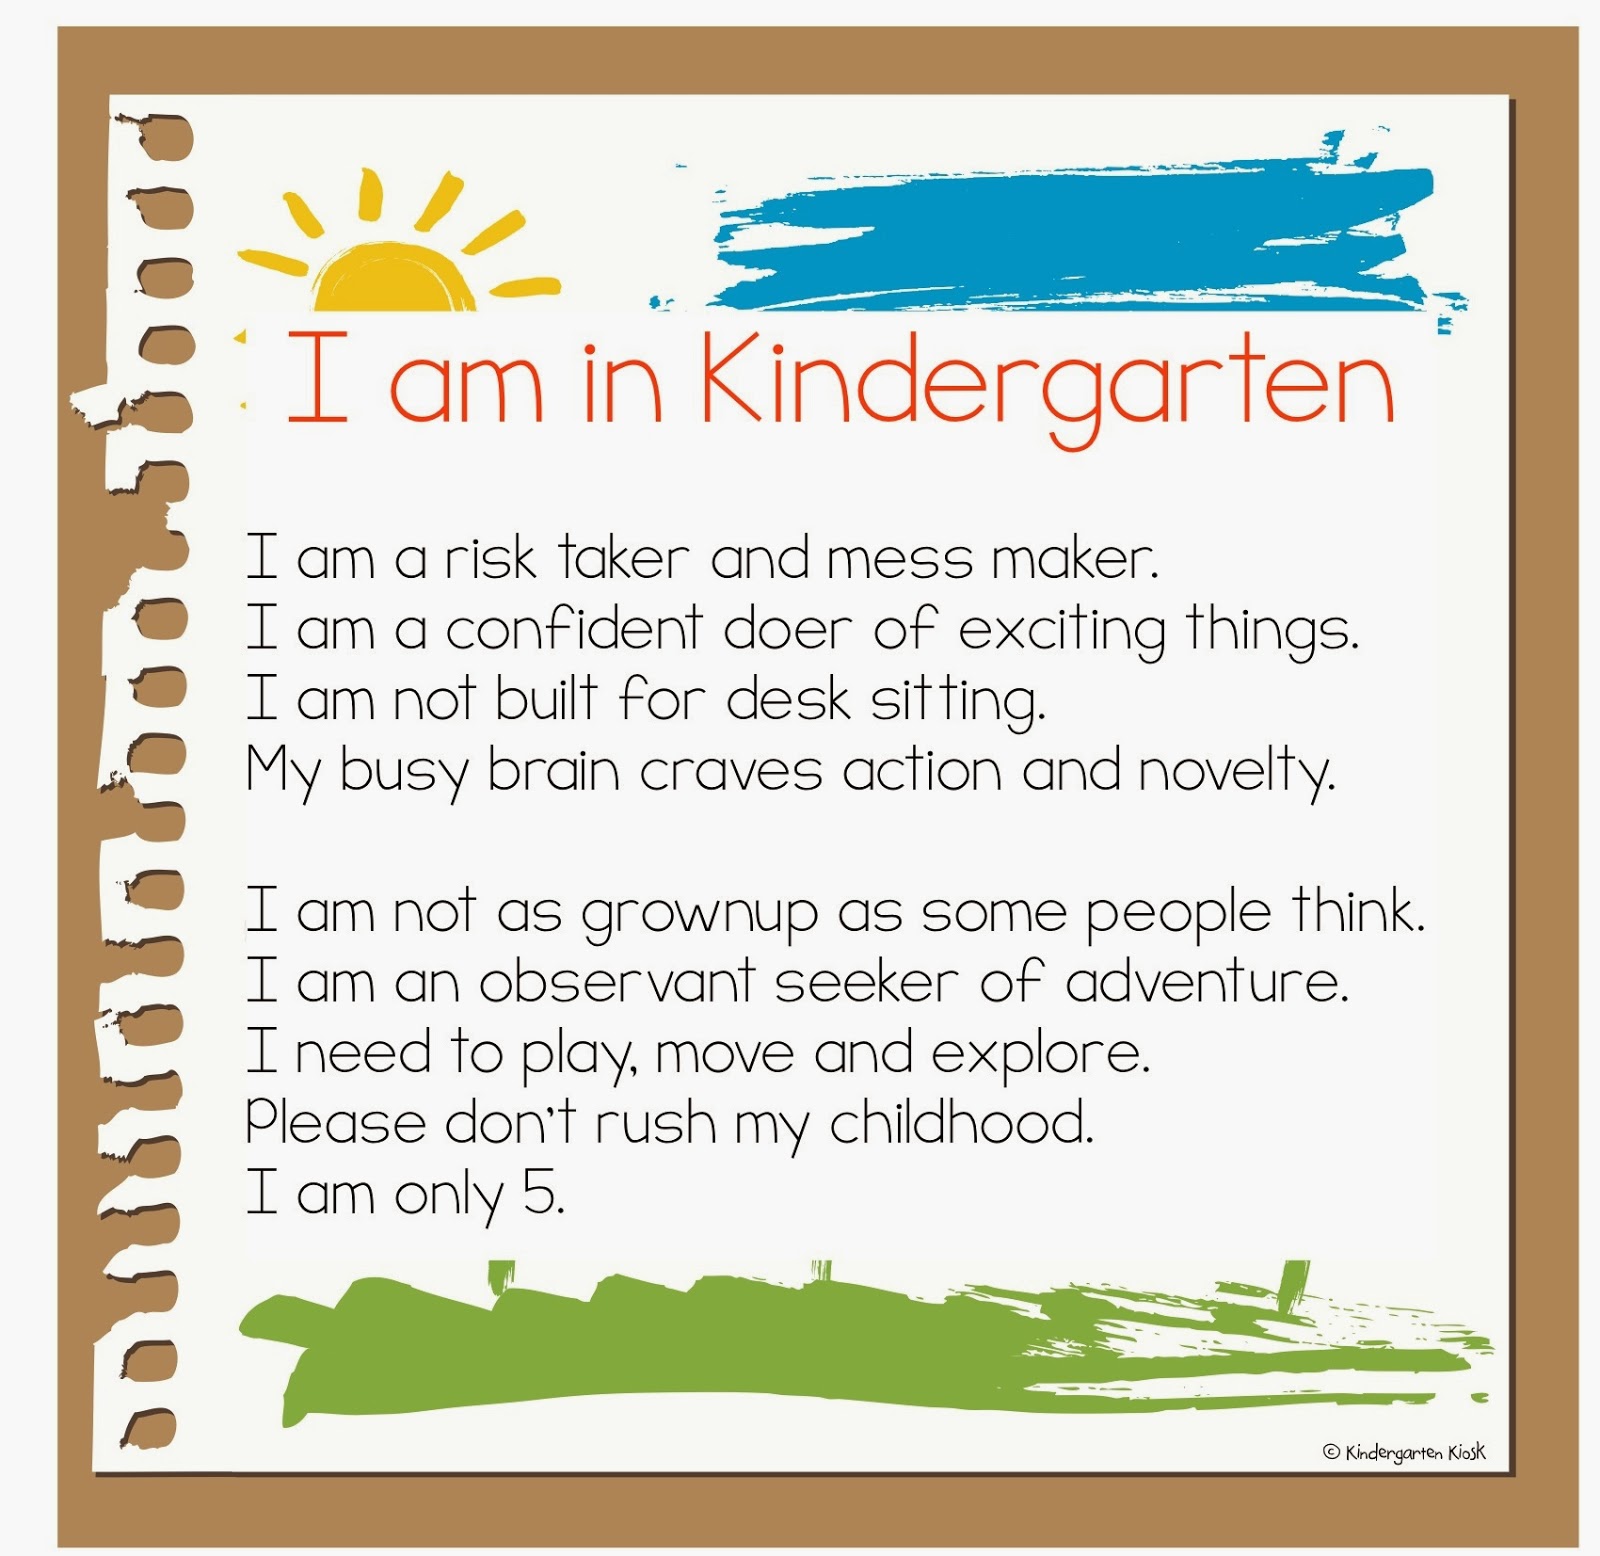 Kindergarten Kiosk: Justifying Kindergarten Play